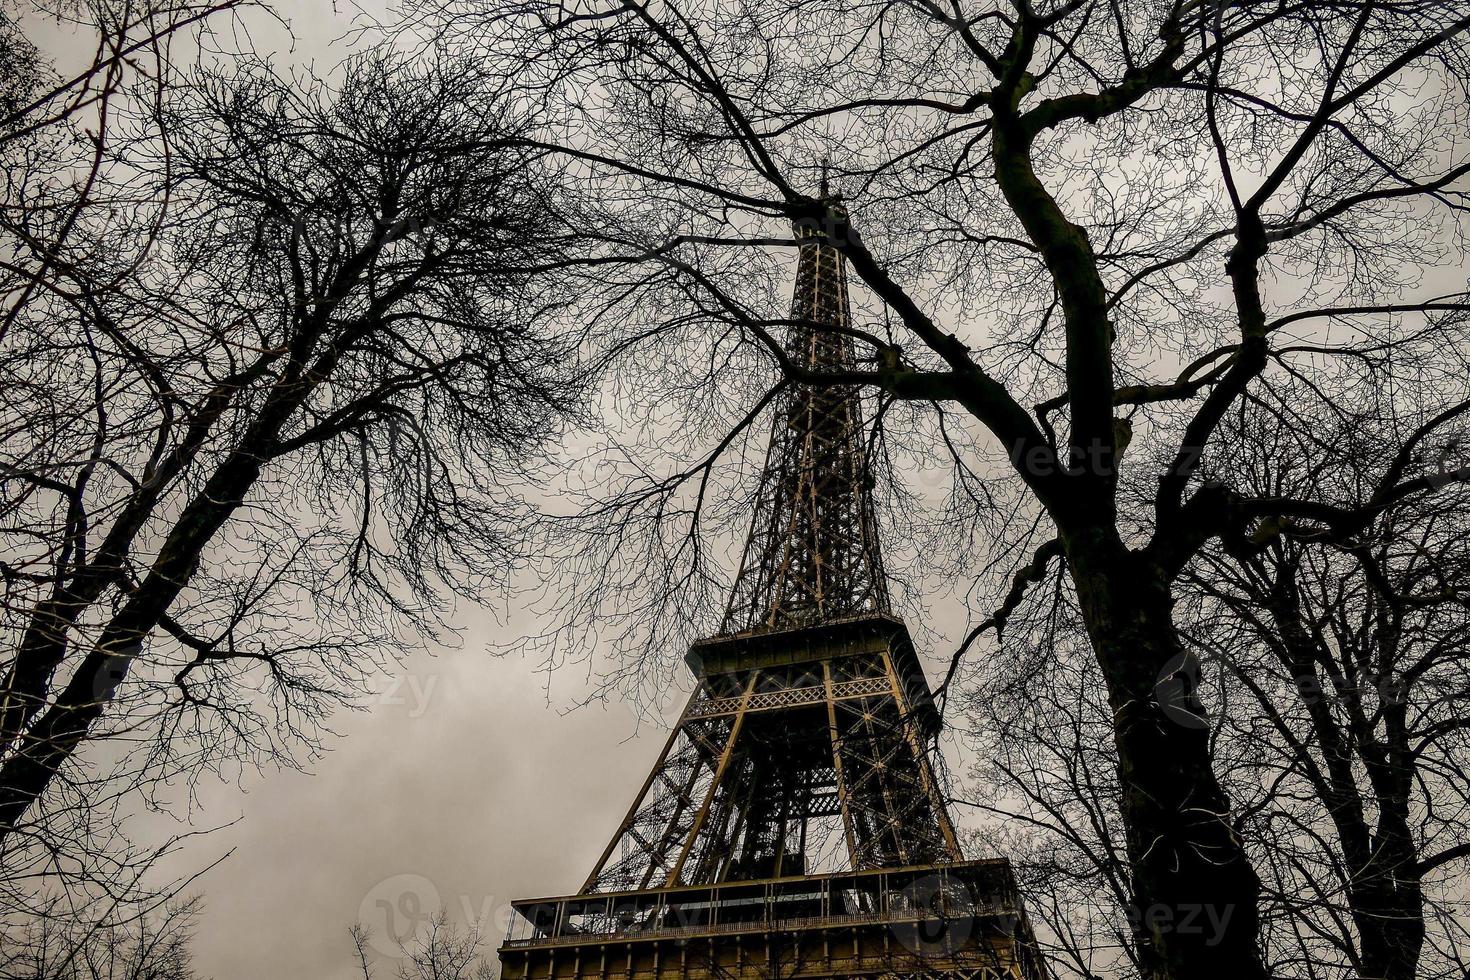 a torre Eiffel foto